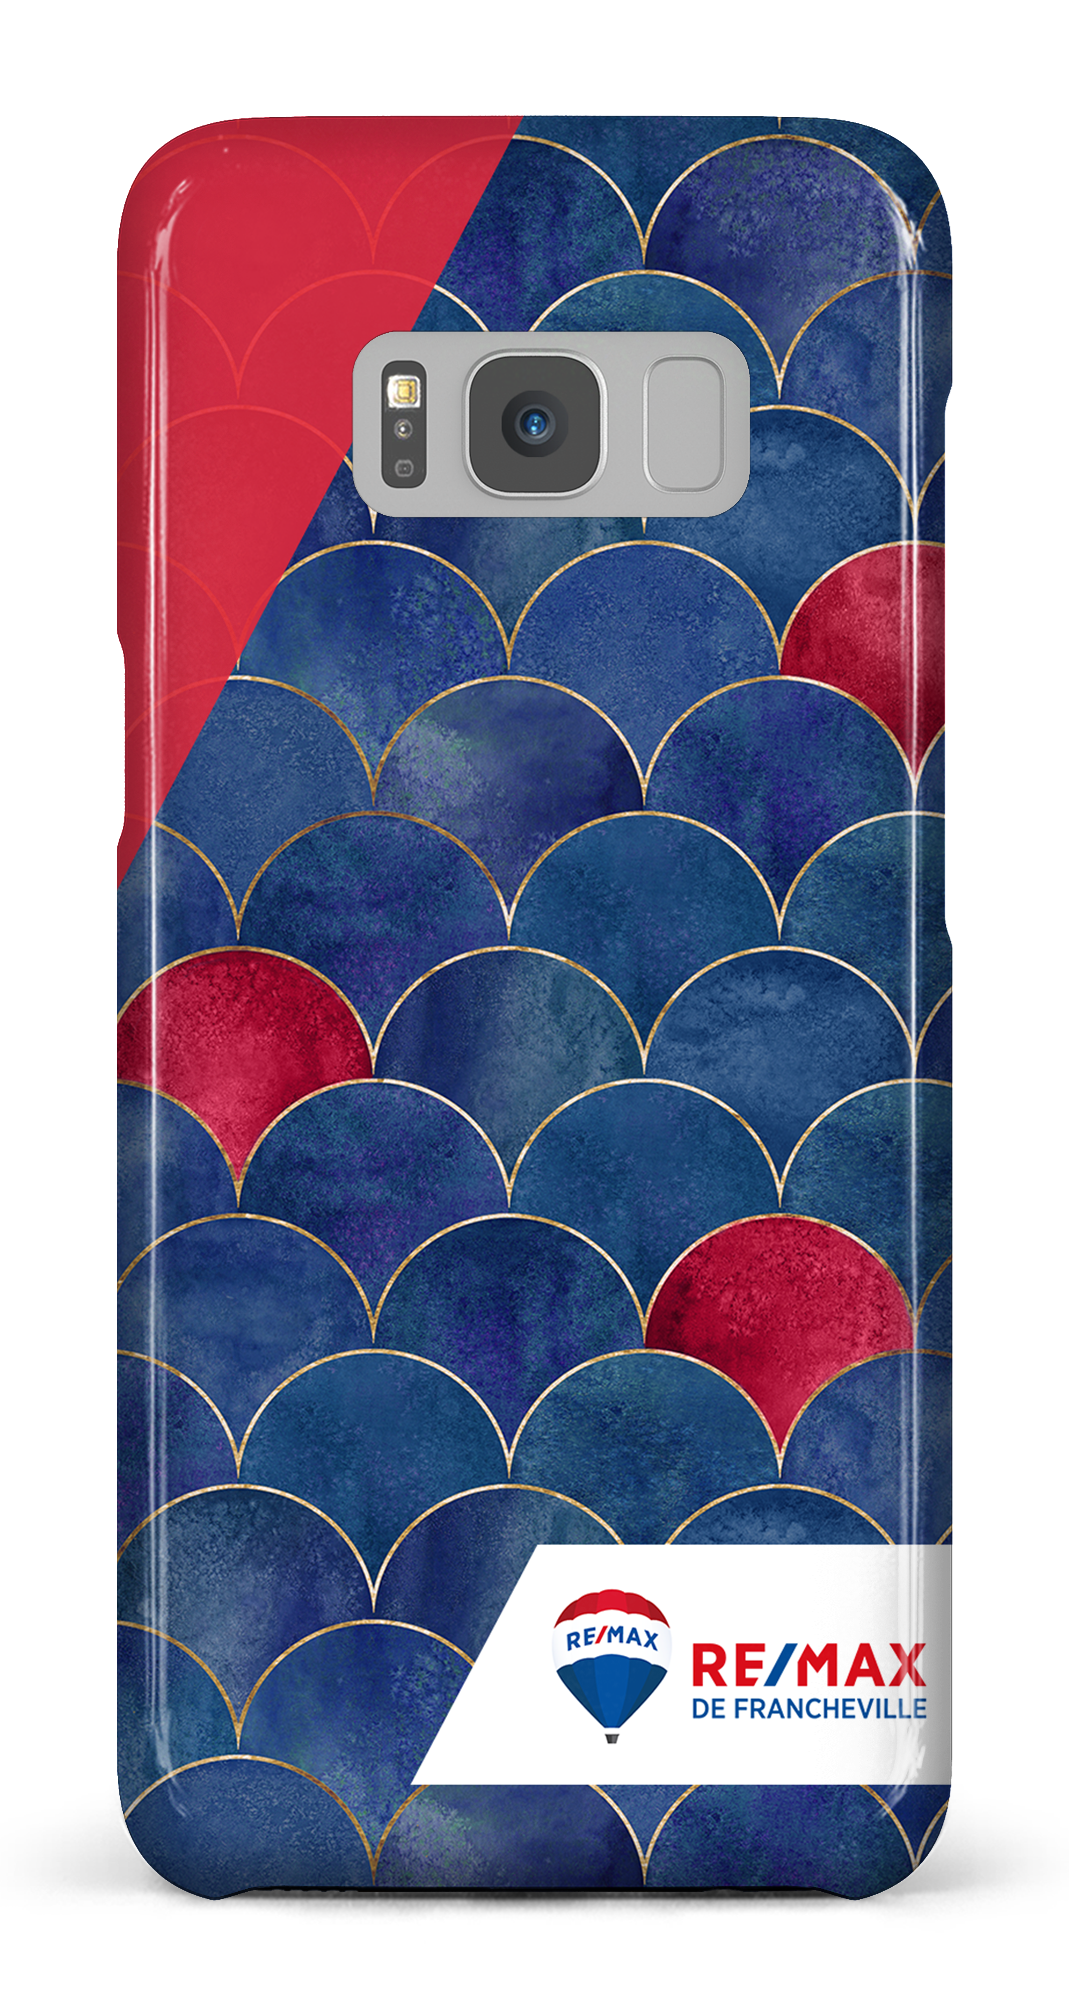 Écailles bicolores de Francheville - Galaxy S8